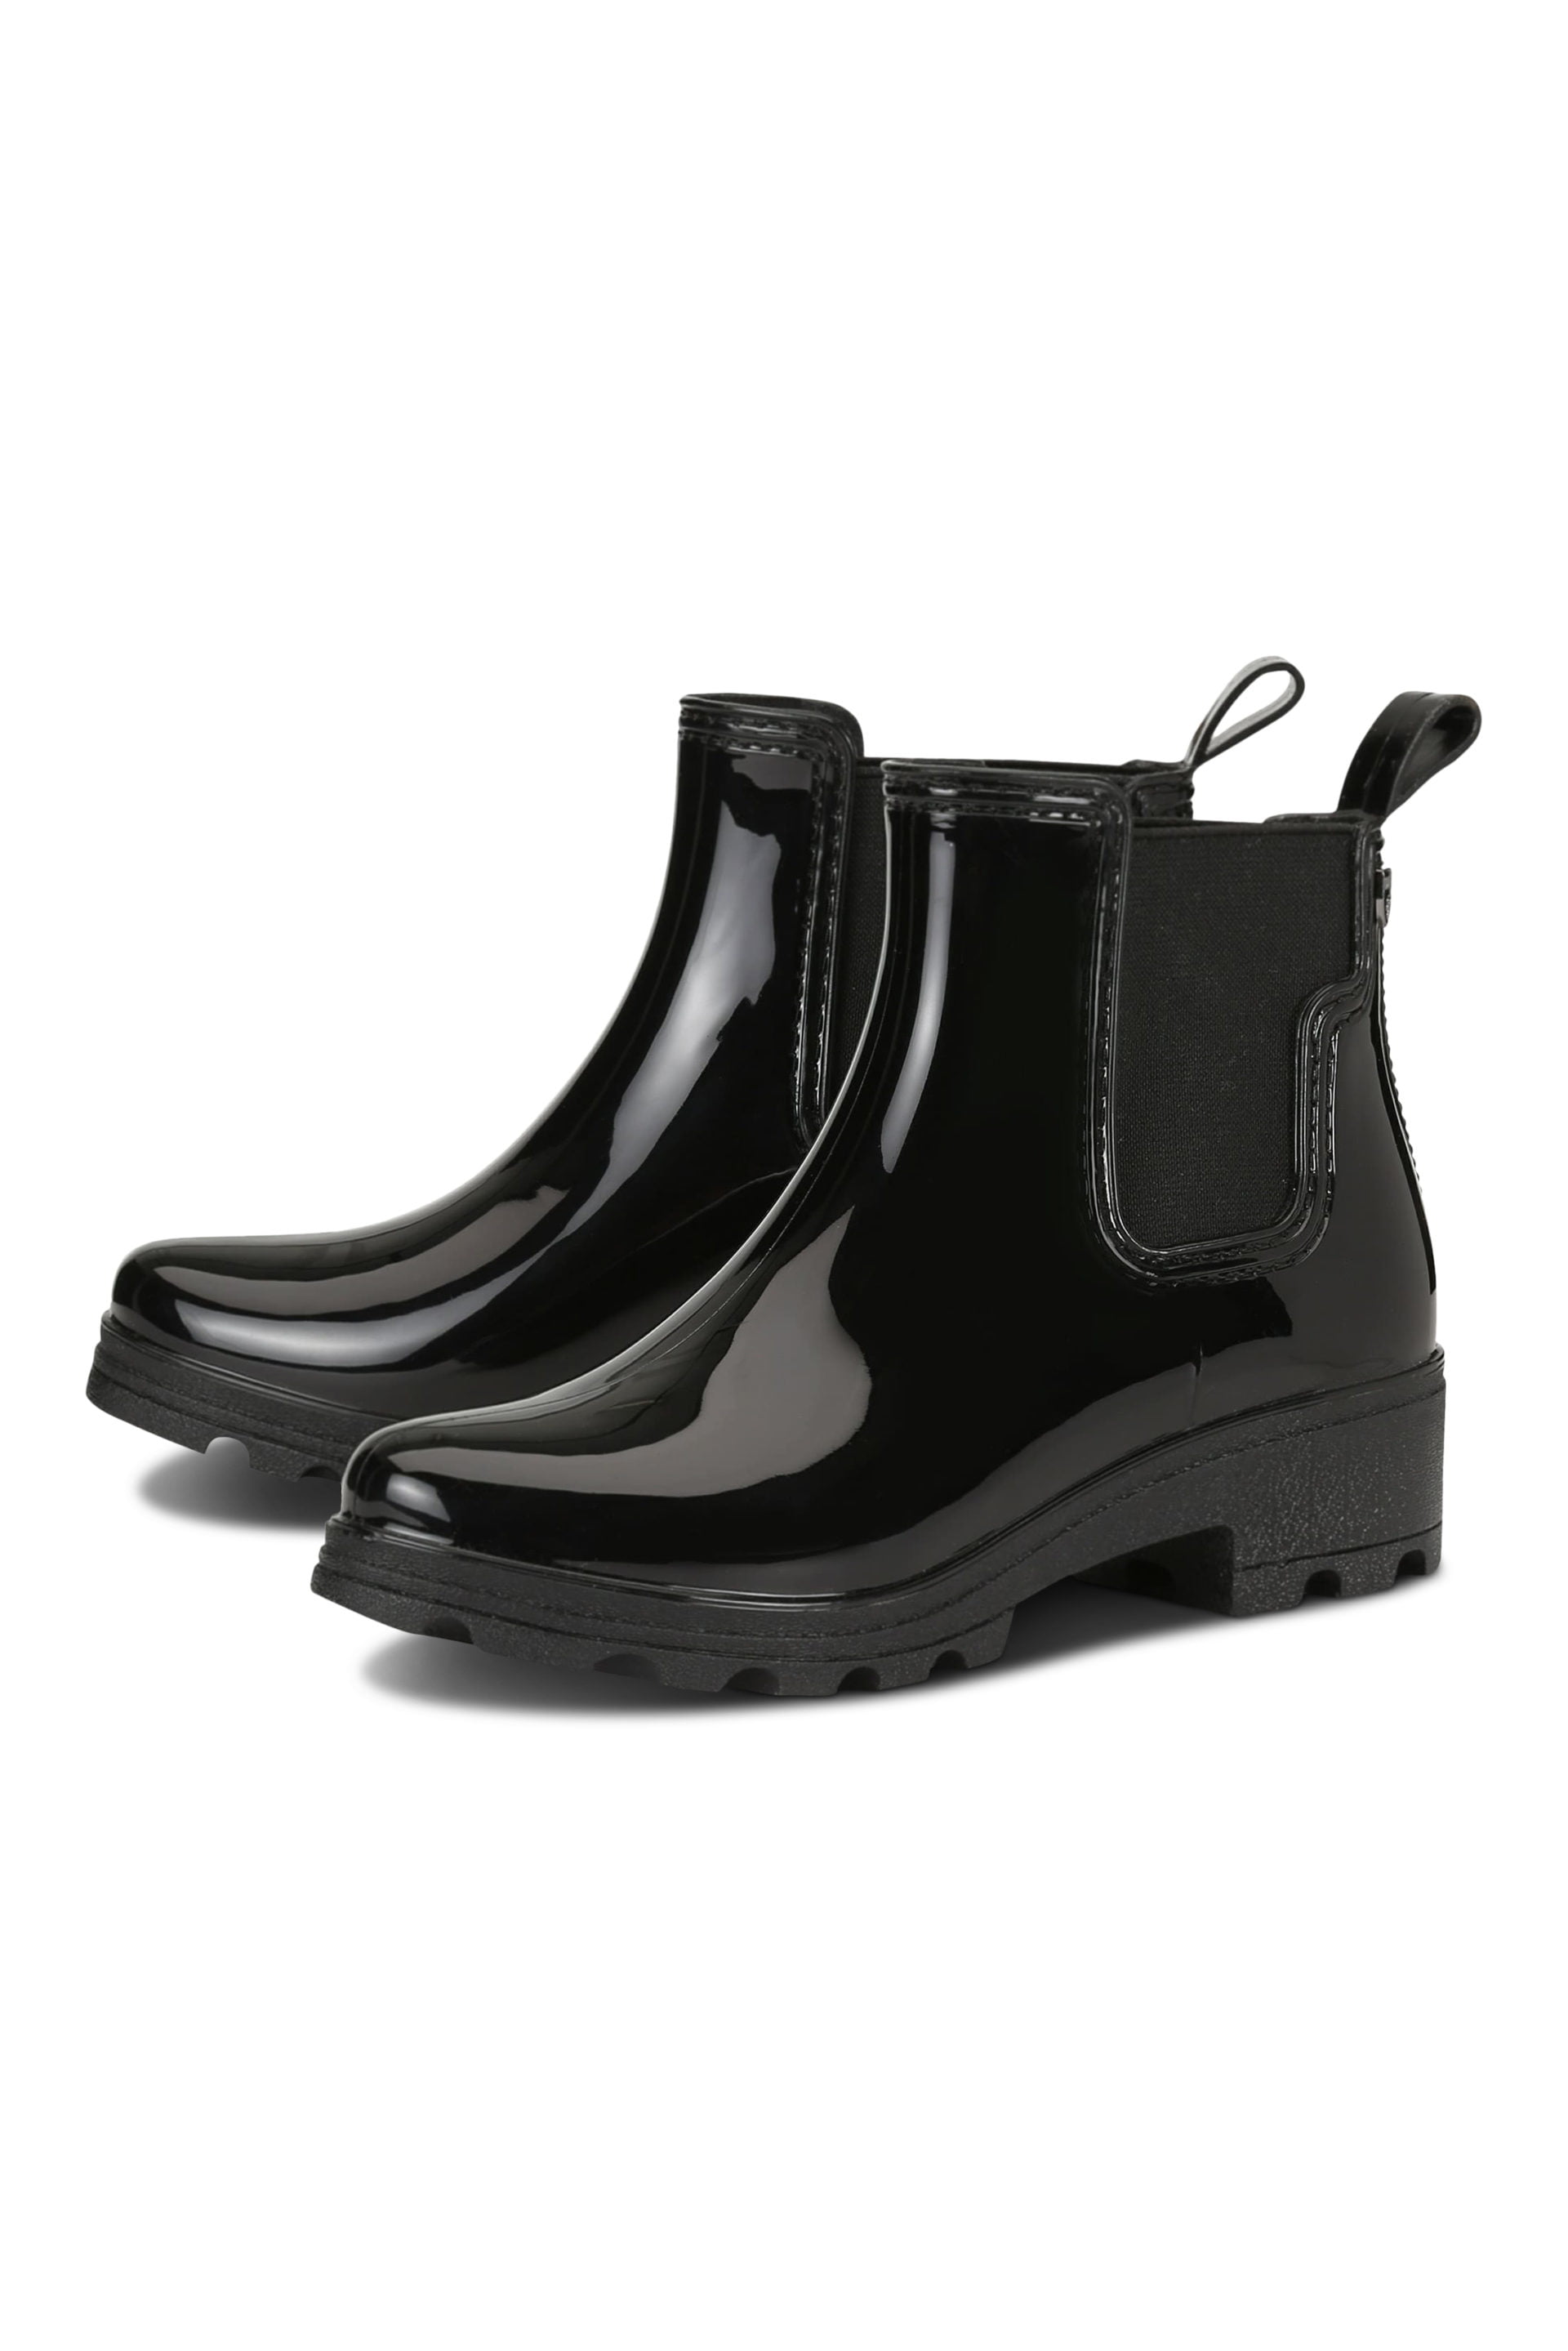 Black shiny ankle rainboots